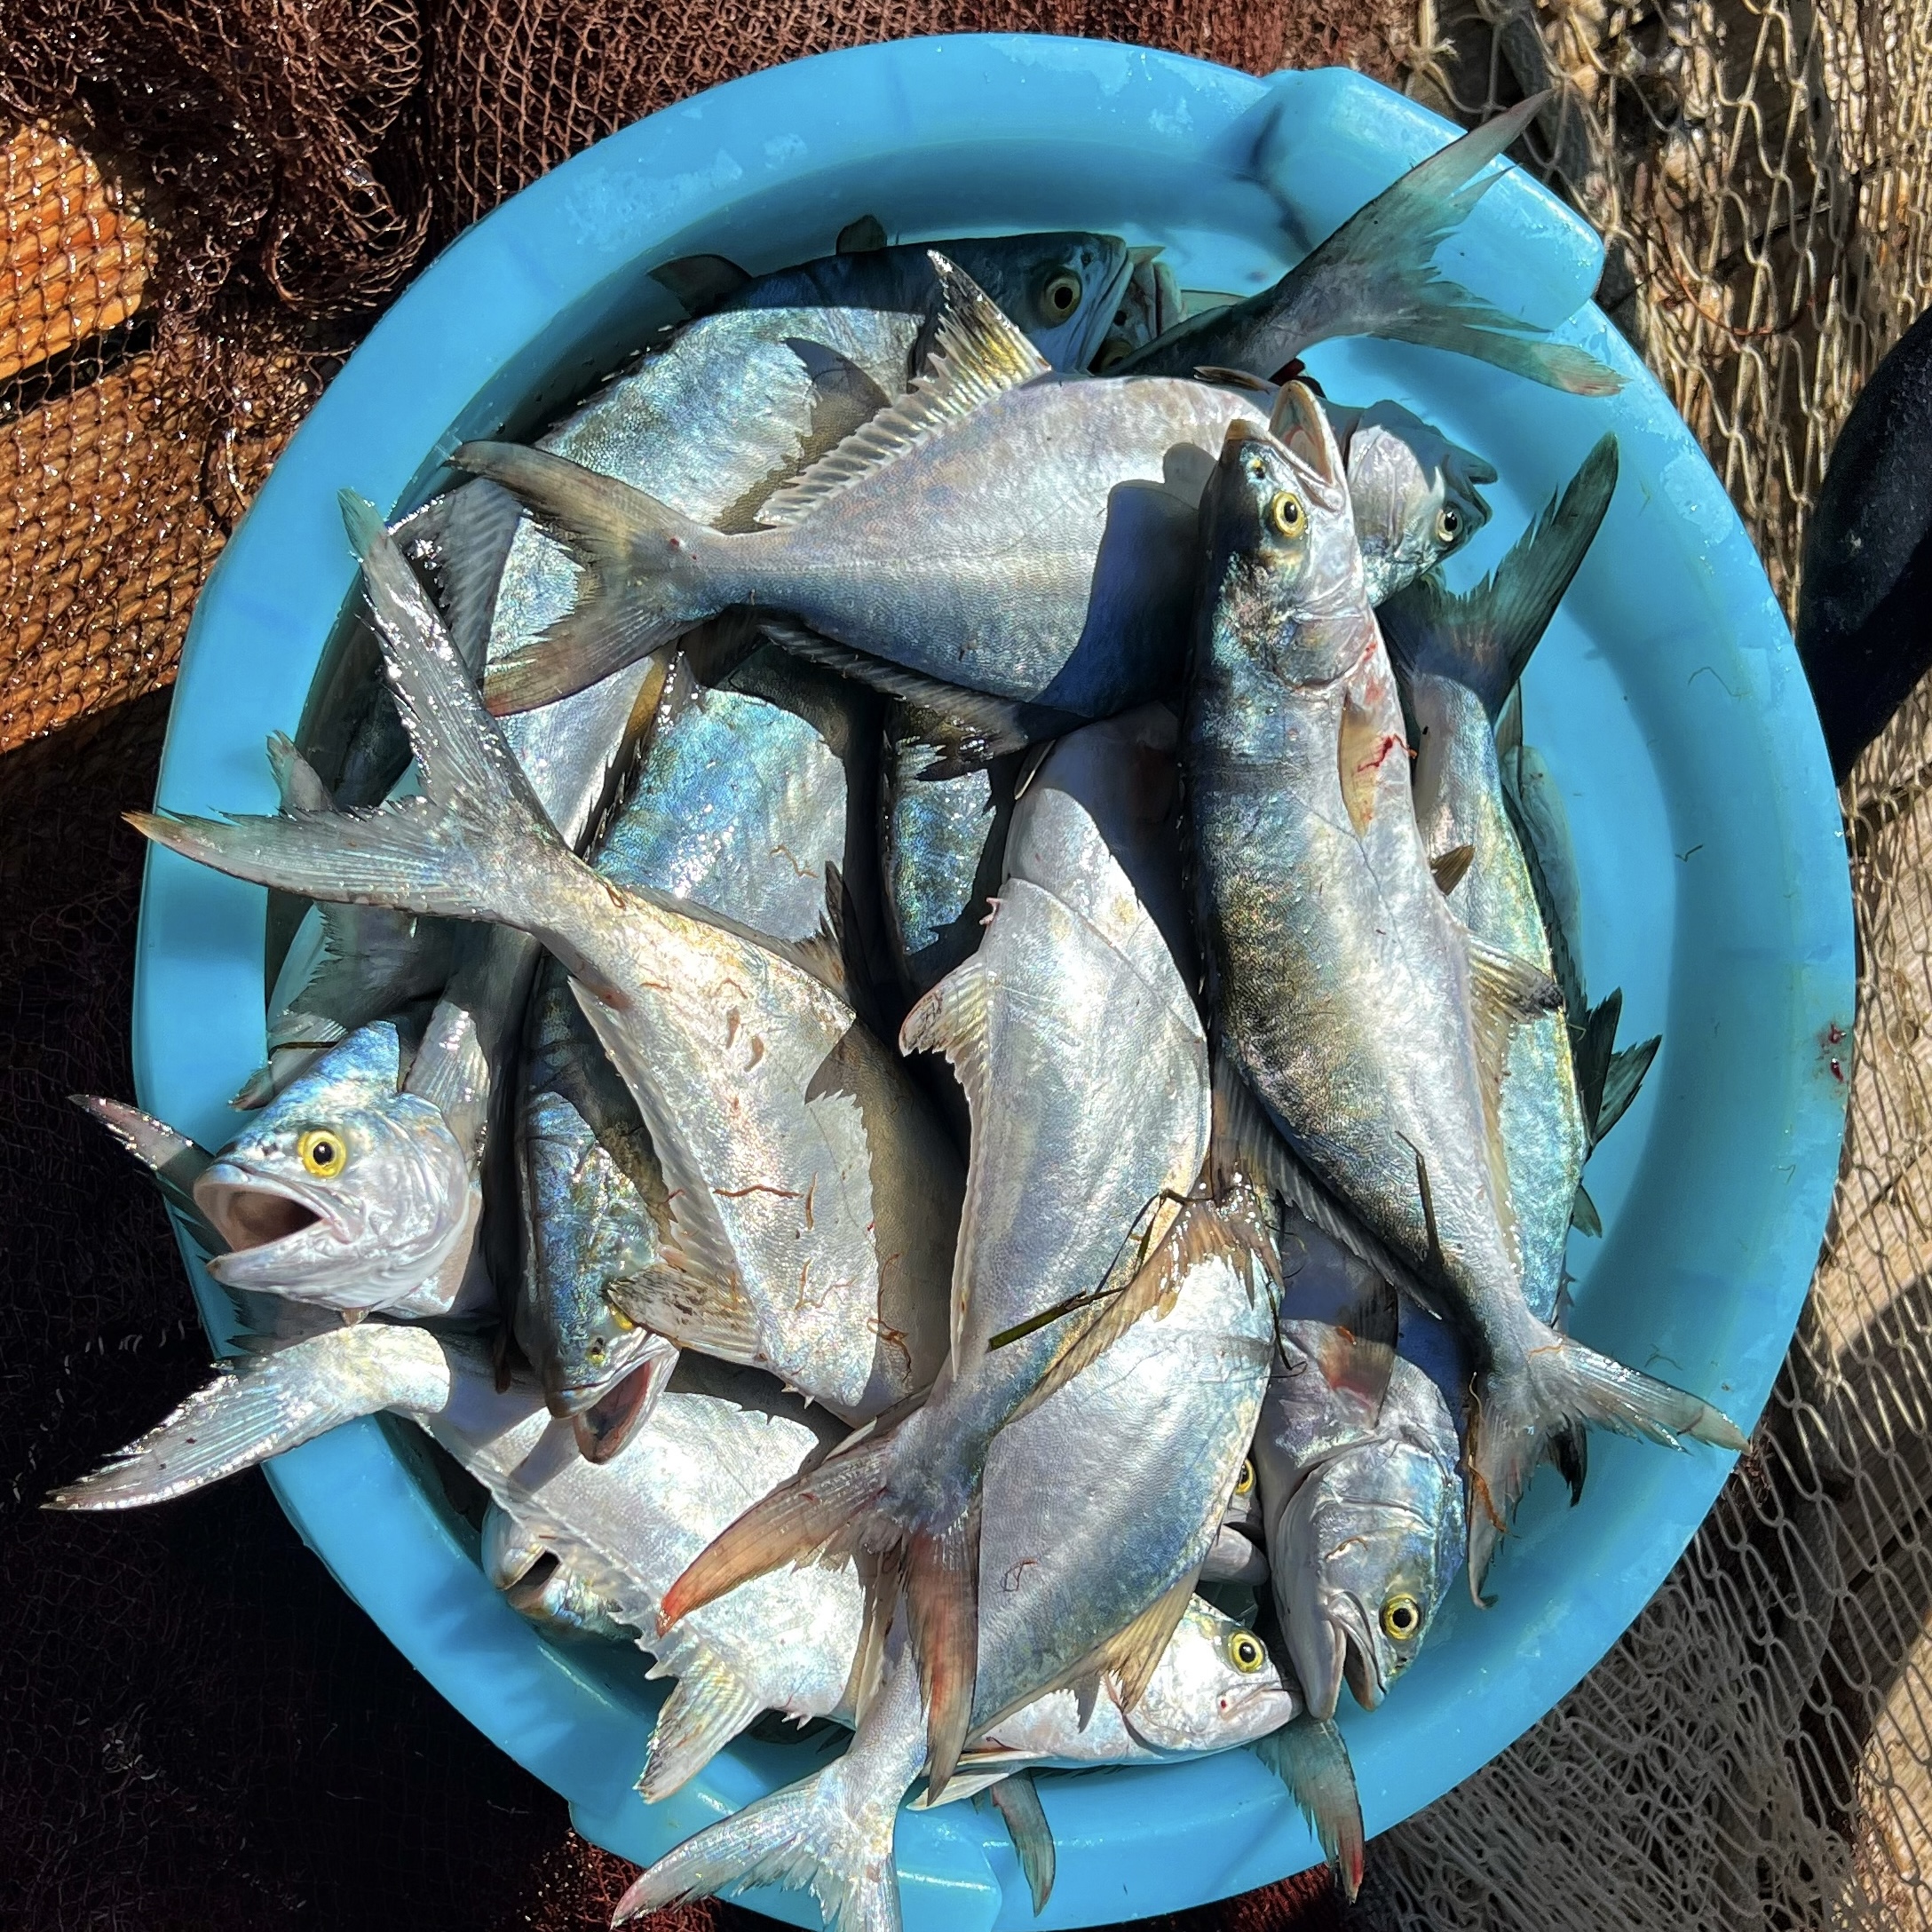 Freshly caught bluefish at Al Trabucco da Mimì | Photo © the Puglia Guys